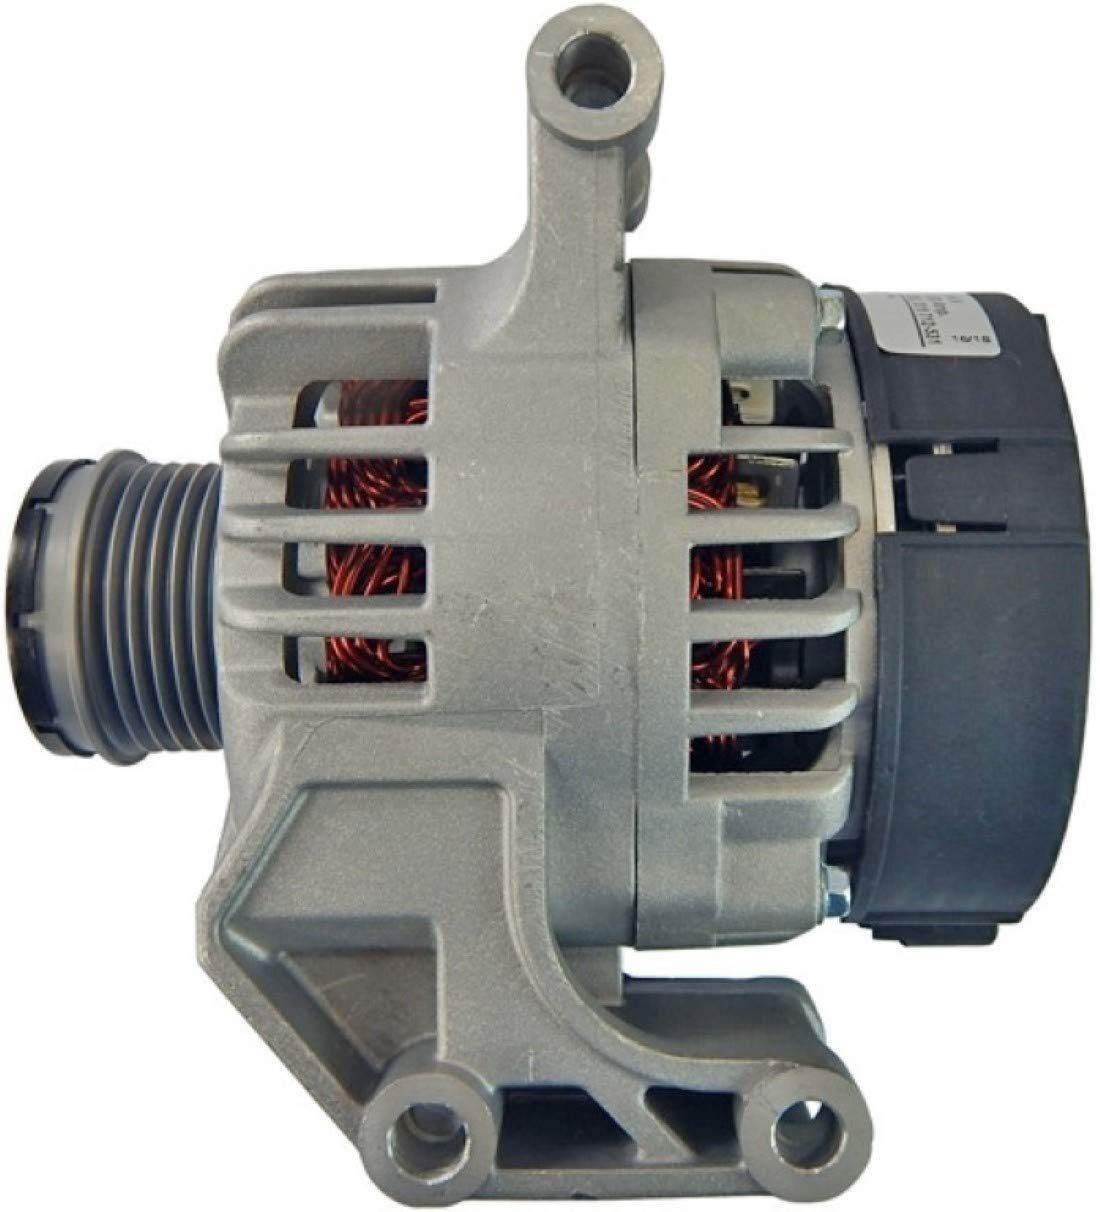 HELLA - Generator/Lichtmaschine - 14V - 120A - für u.a. Opel Corsa C (X01) - 8EL 011 712-531 von Hella